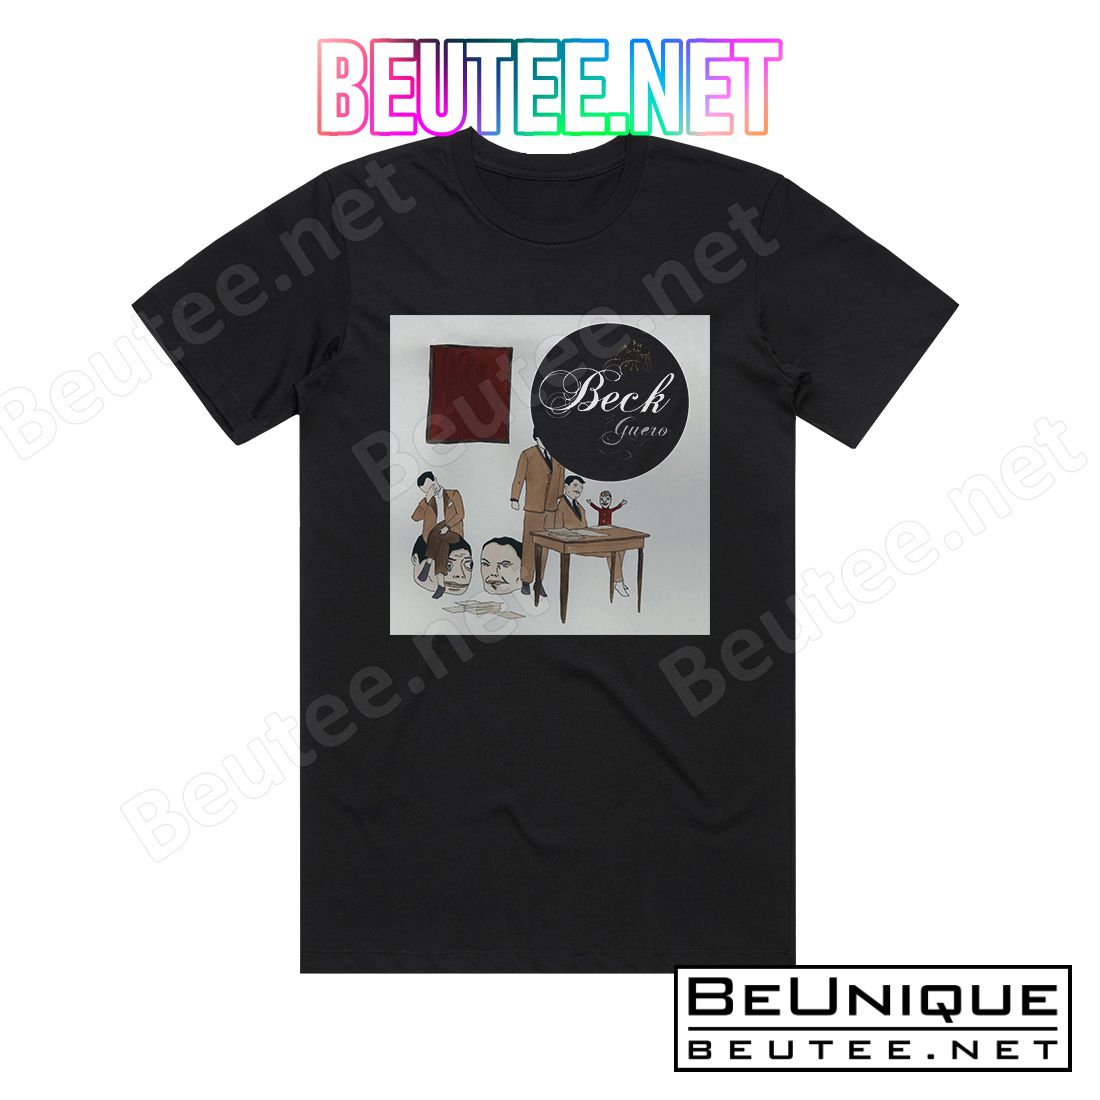 Beck Guero Album Cover T-Shirt